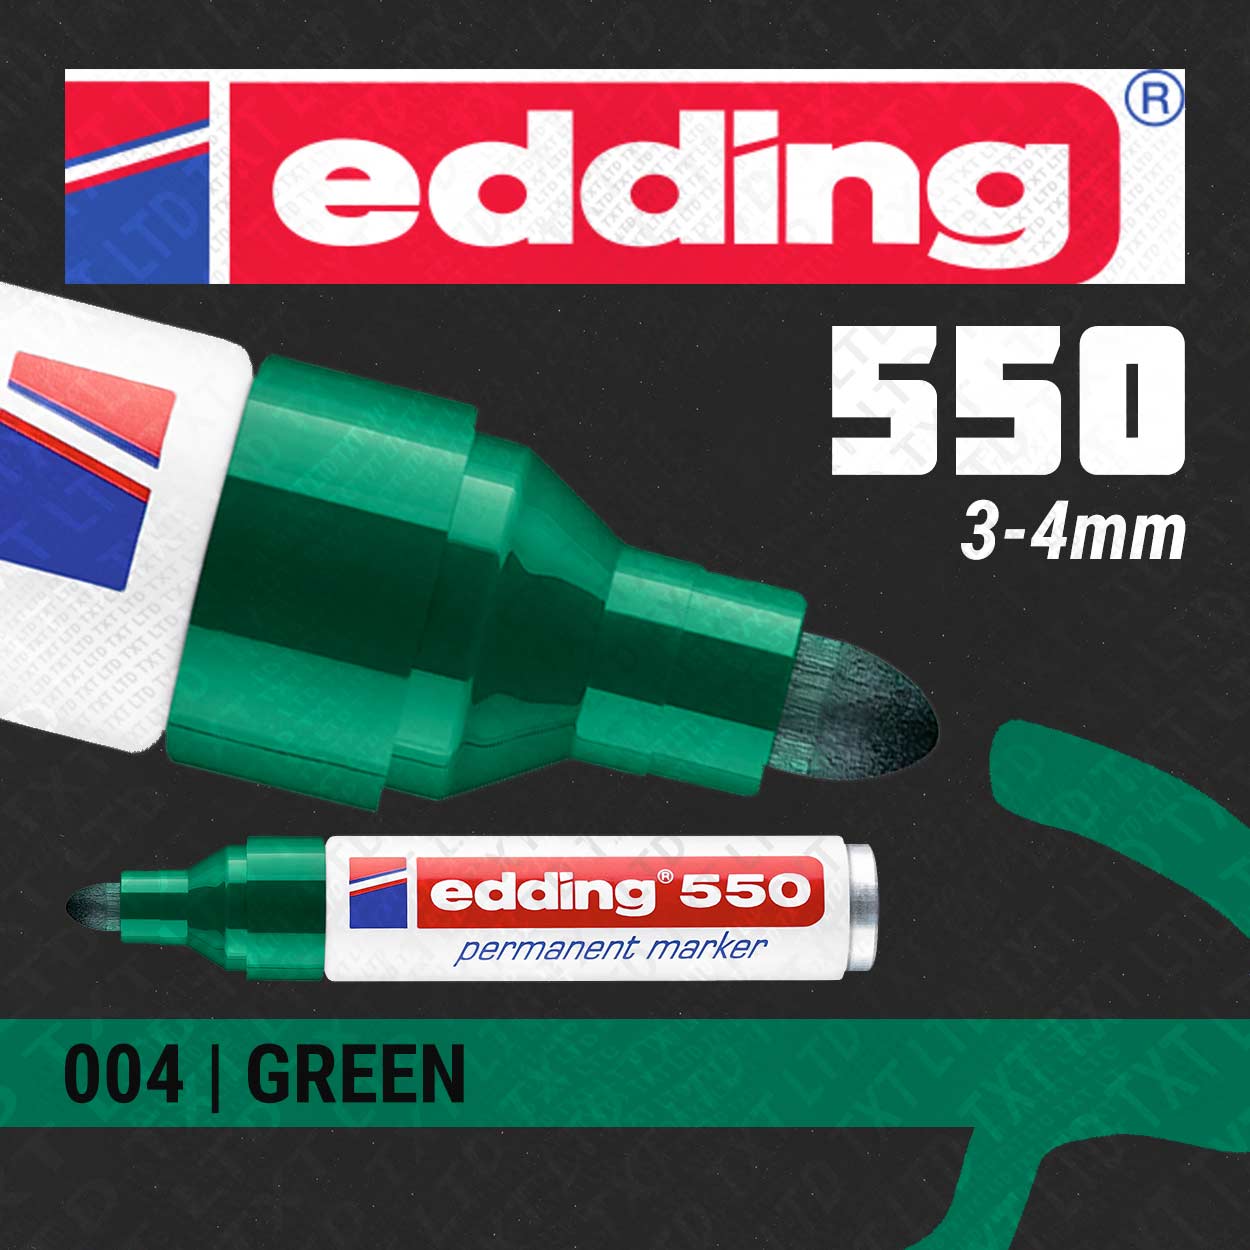 edding 550 Permanent Marker